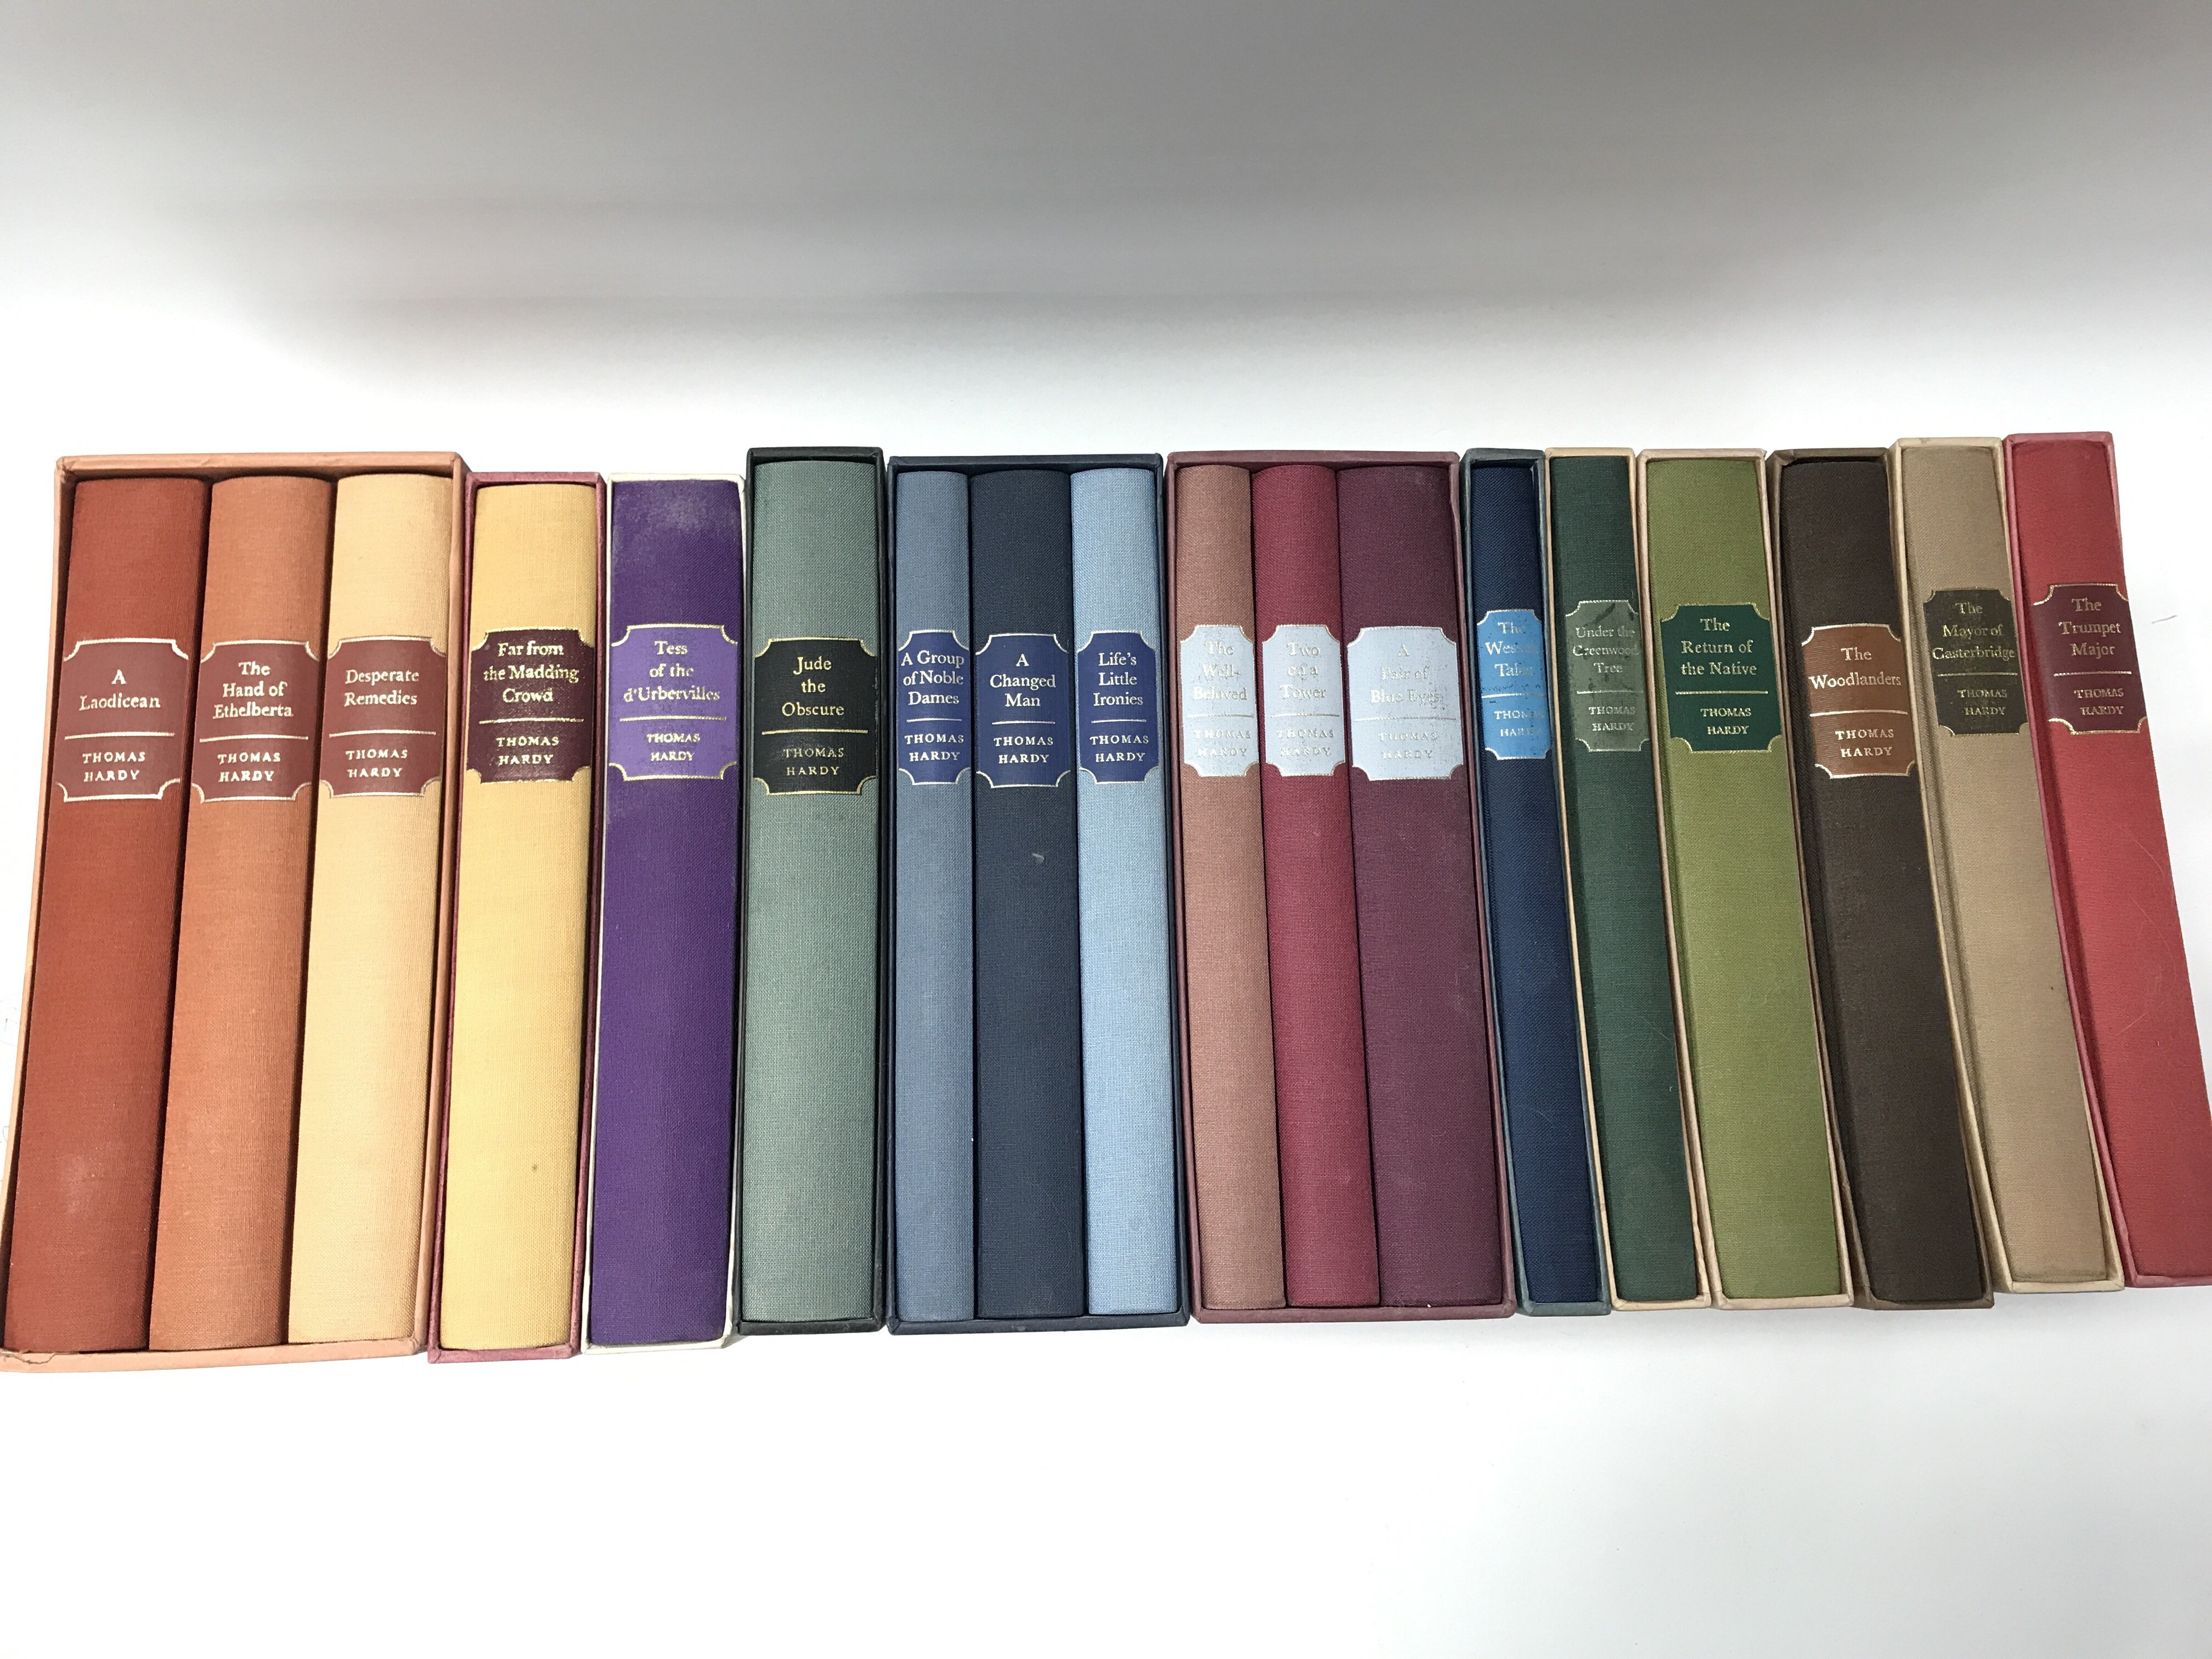 A large collection of Folio Society hardback books